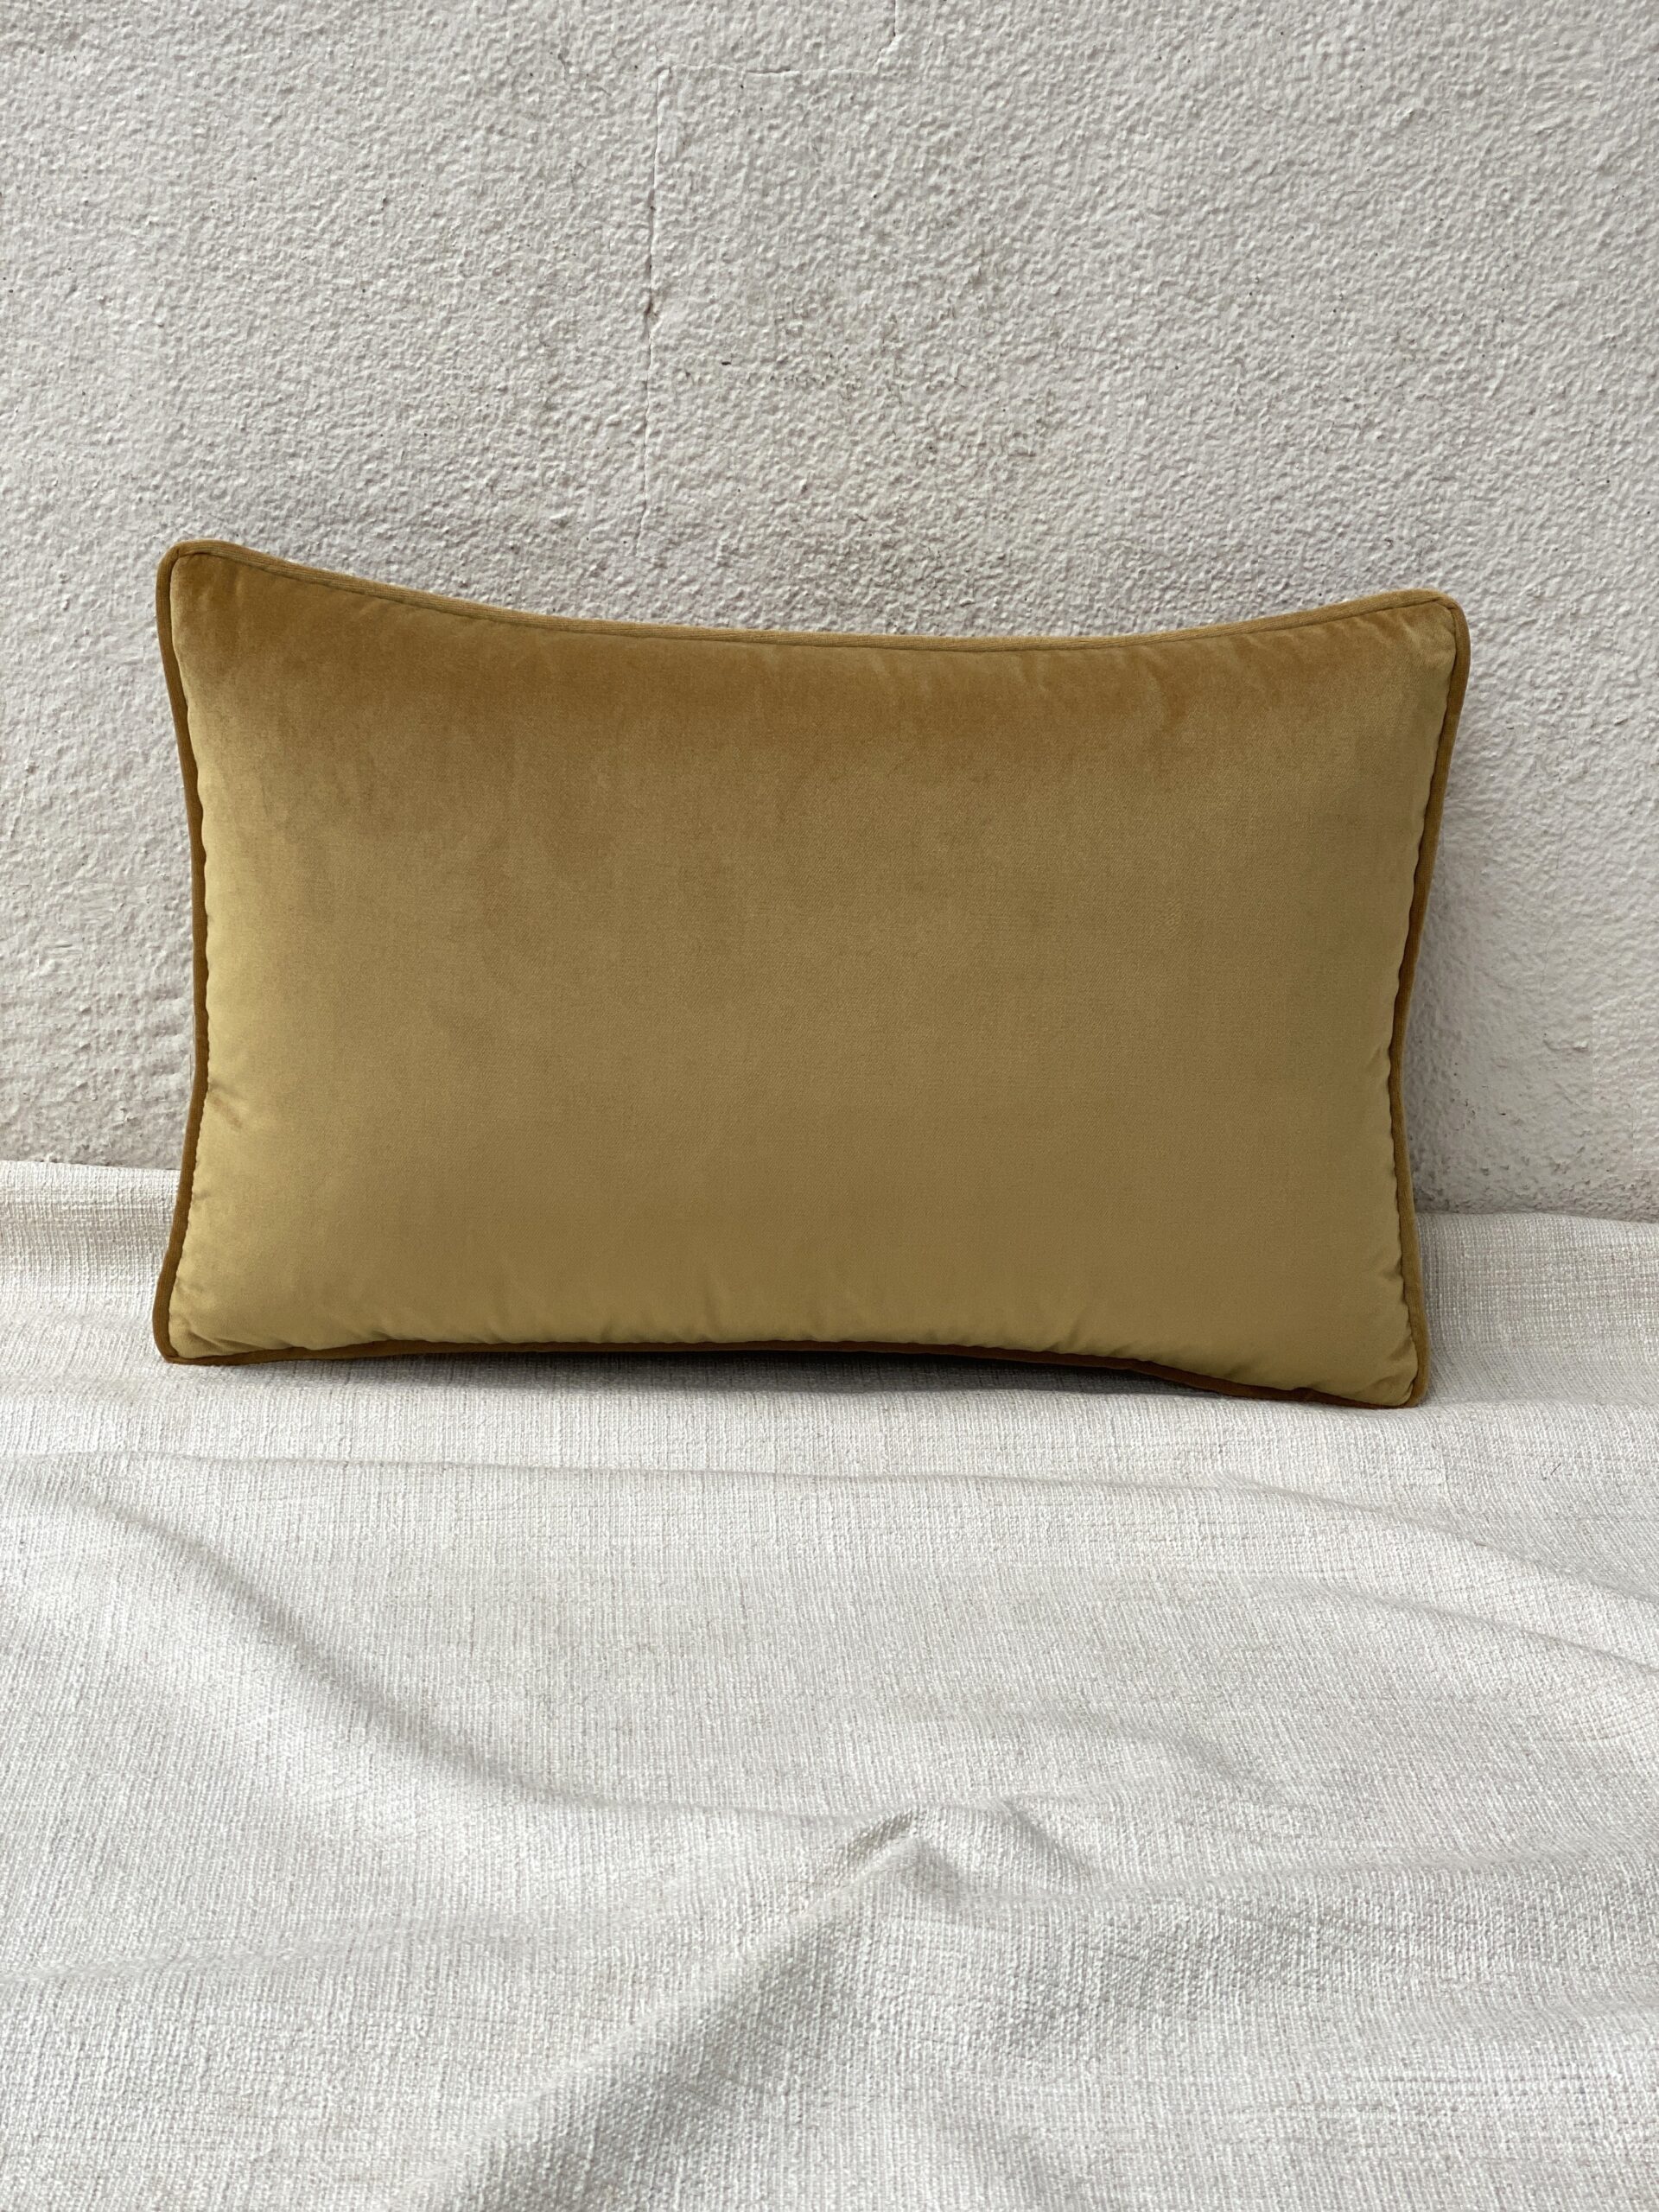 Carnegie Origin Pillows